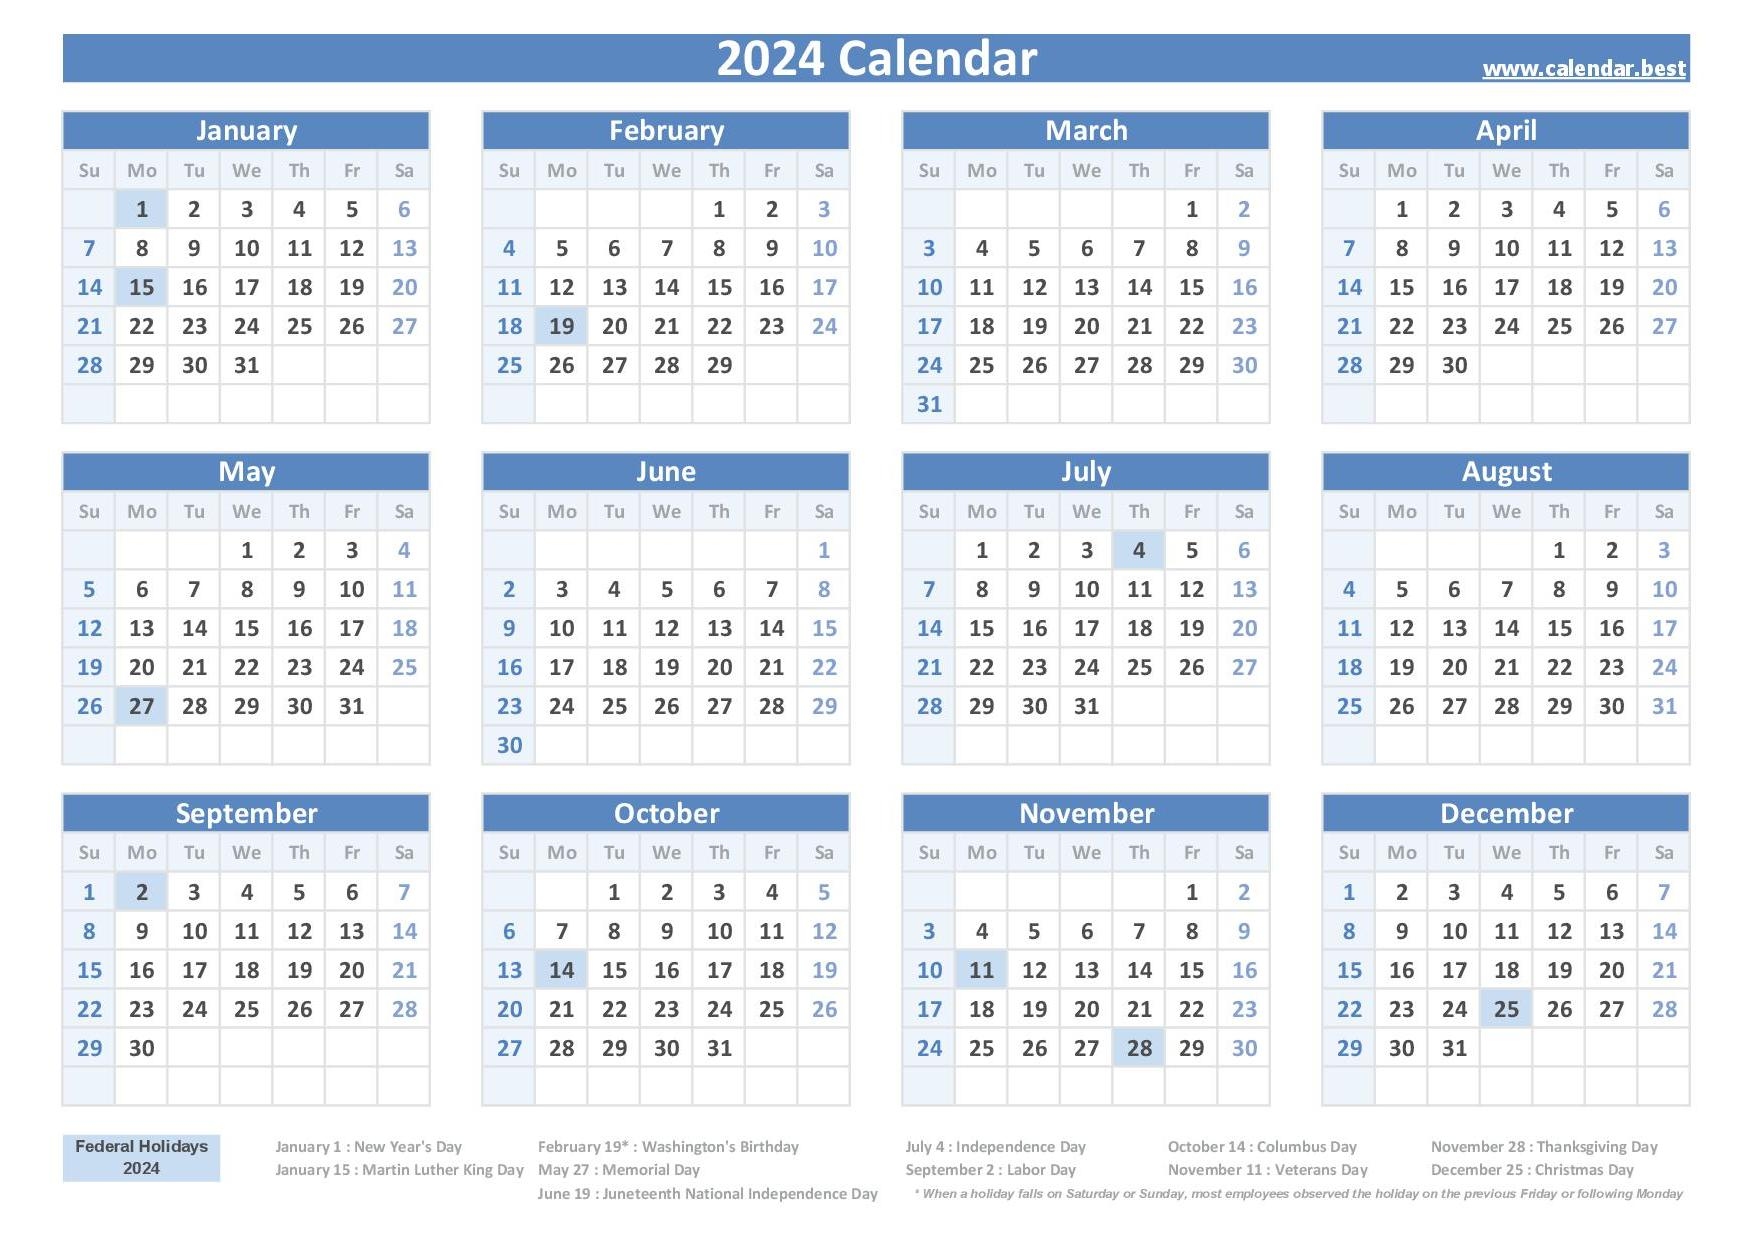 2024 Us Federal Holiday Calendar Printable Bill Marjie - Free Printable 2024 Calendar Vector With Holidays